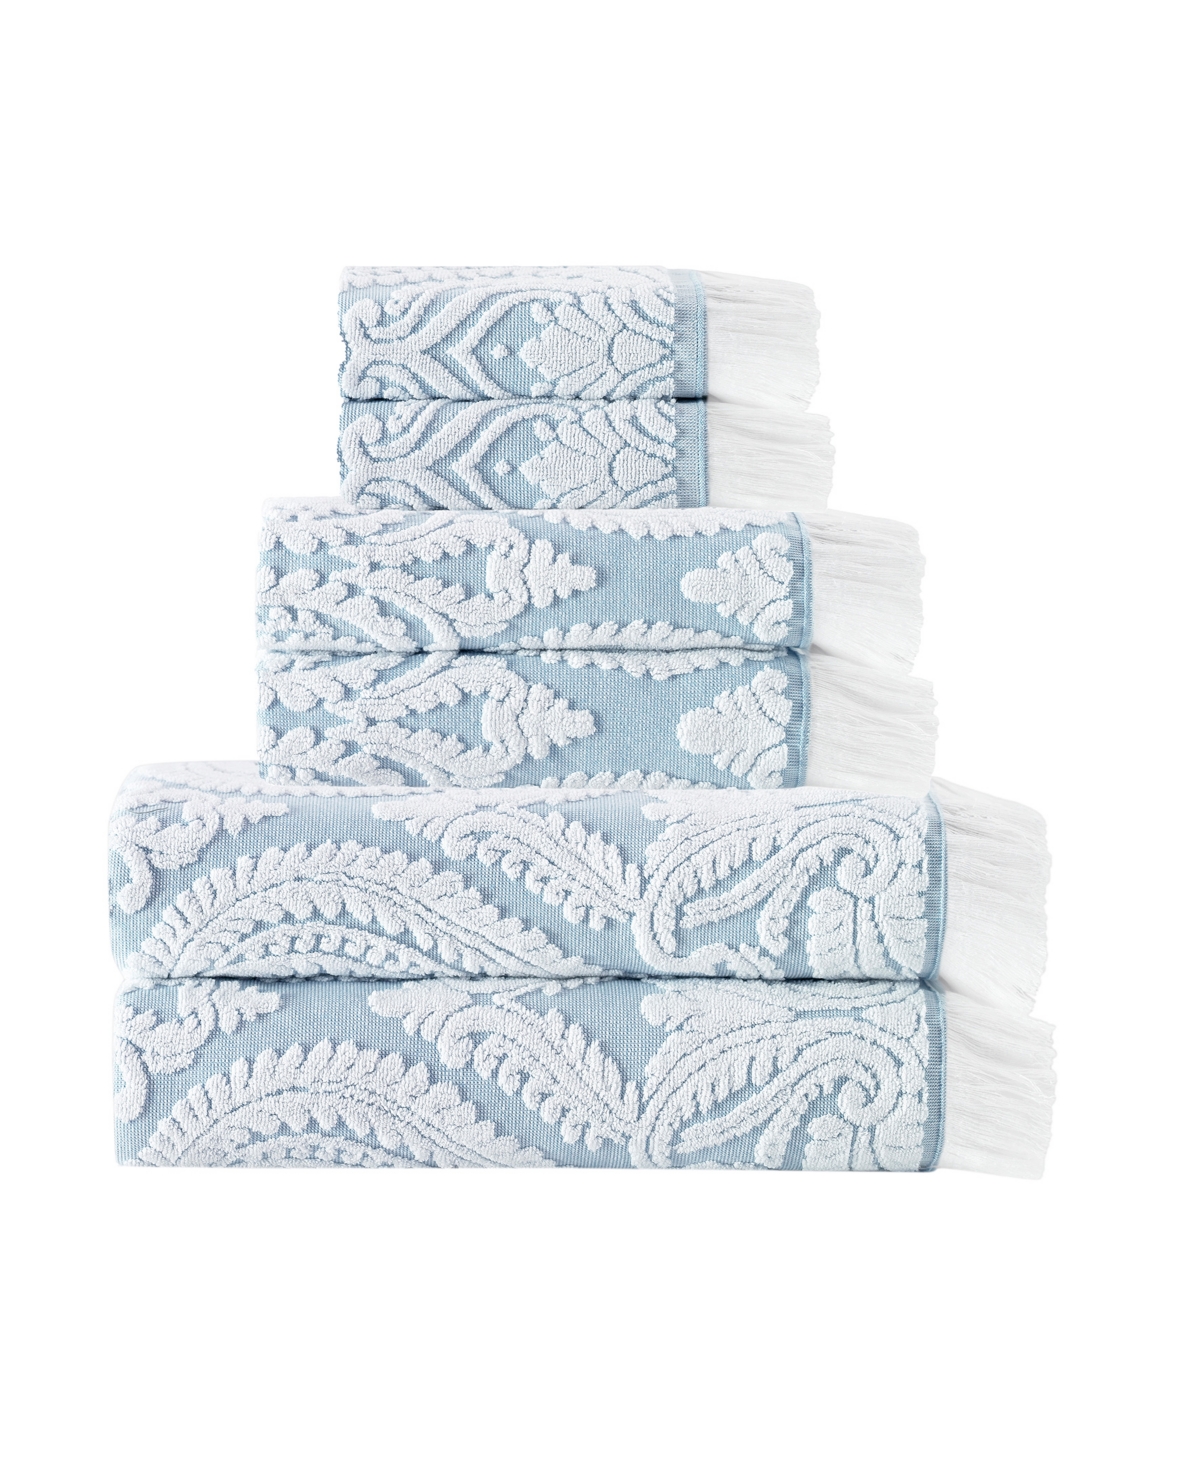 Enchante Home Laina 6-pc. Turkish Cotton Towel Set In Turquoise